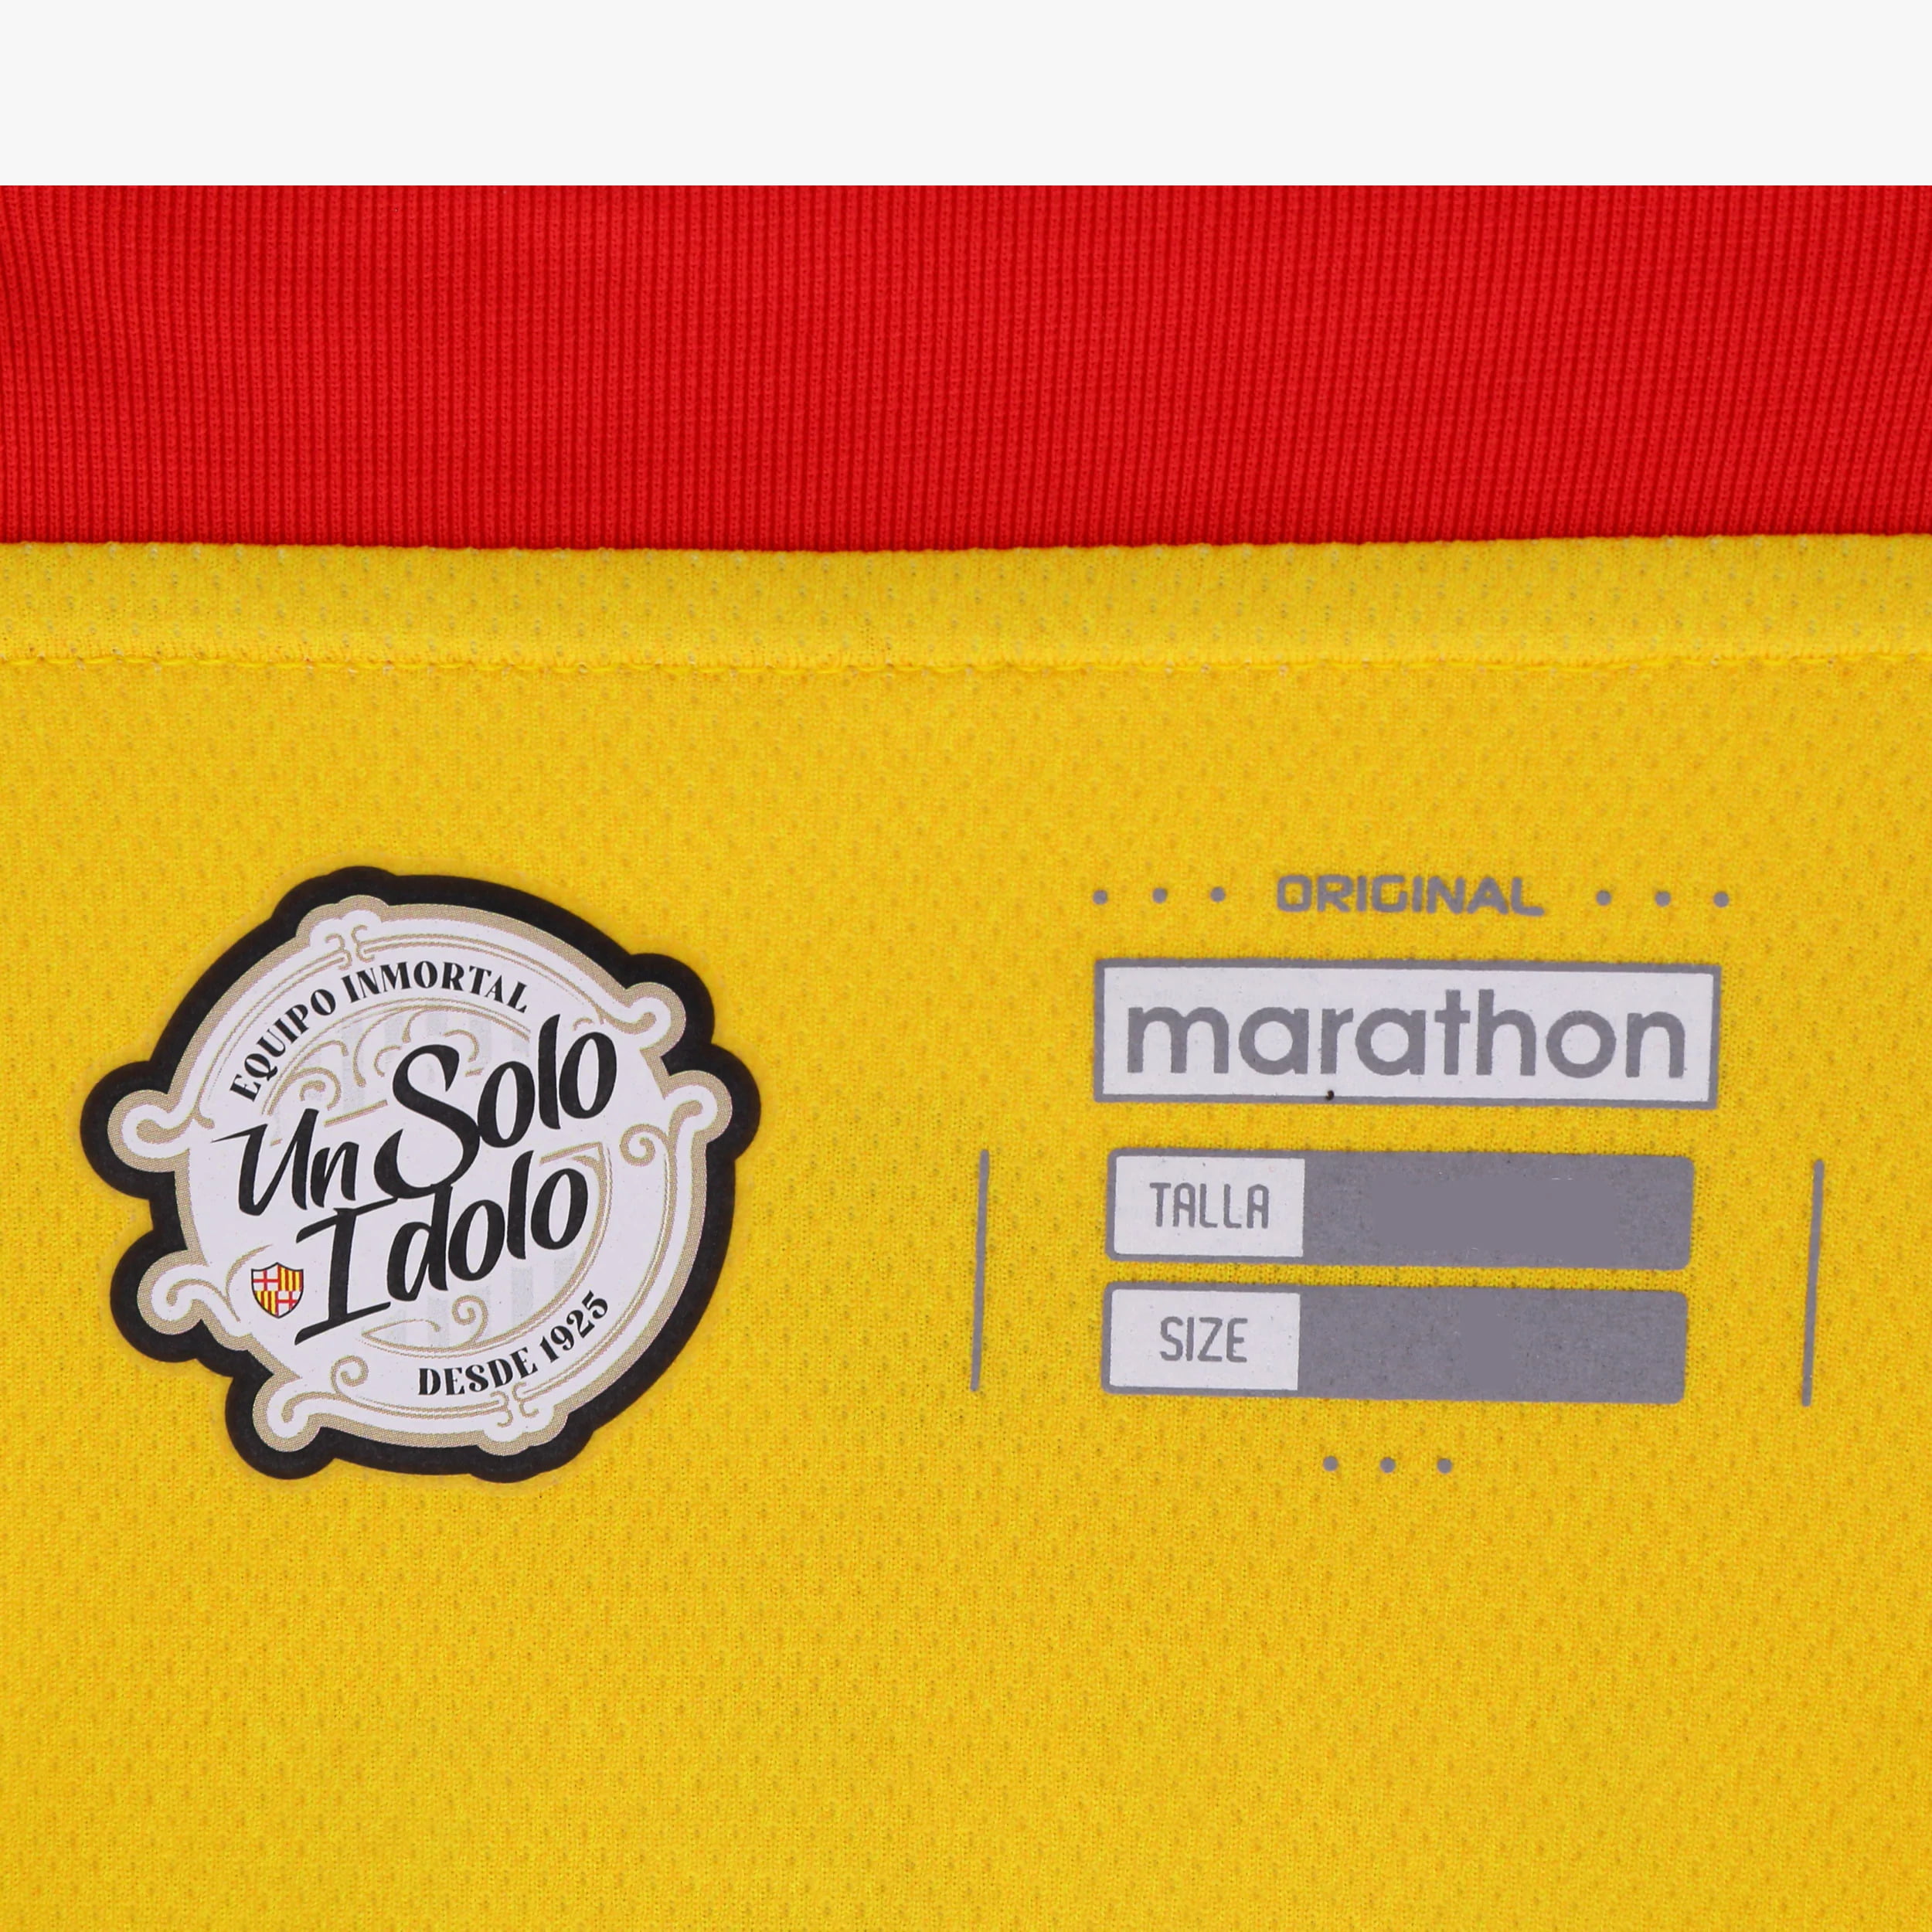 marathon ecuador jersey